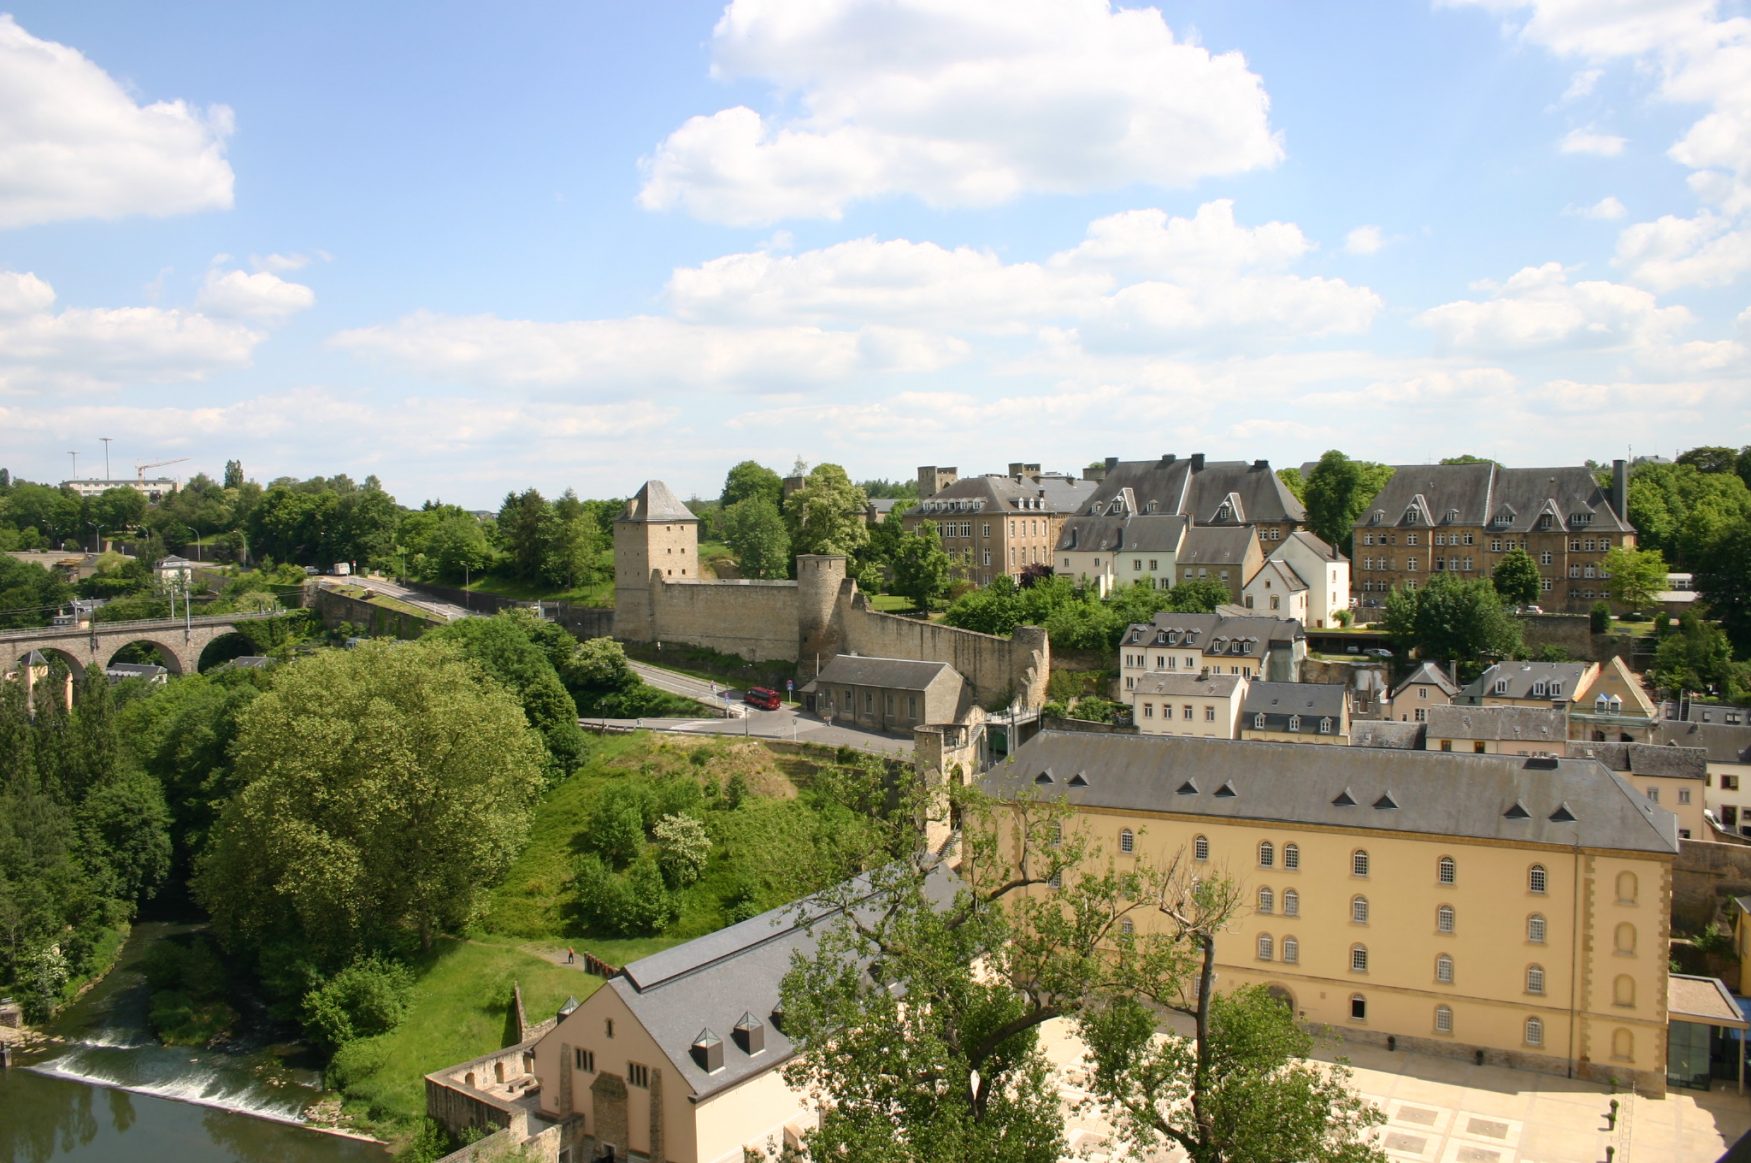 Luxemburg Stadt